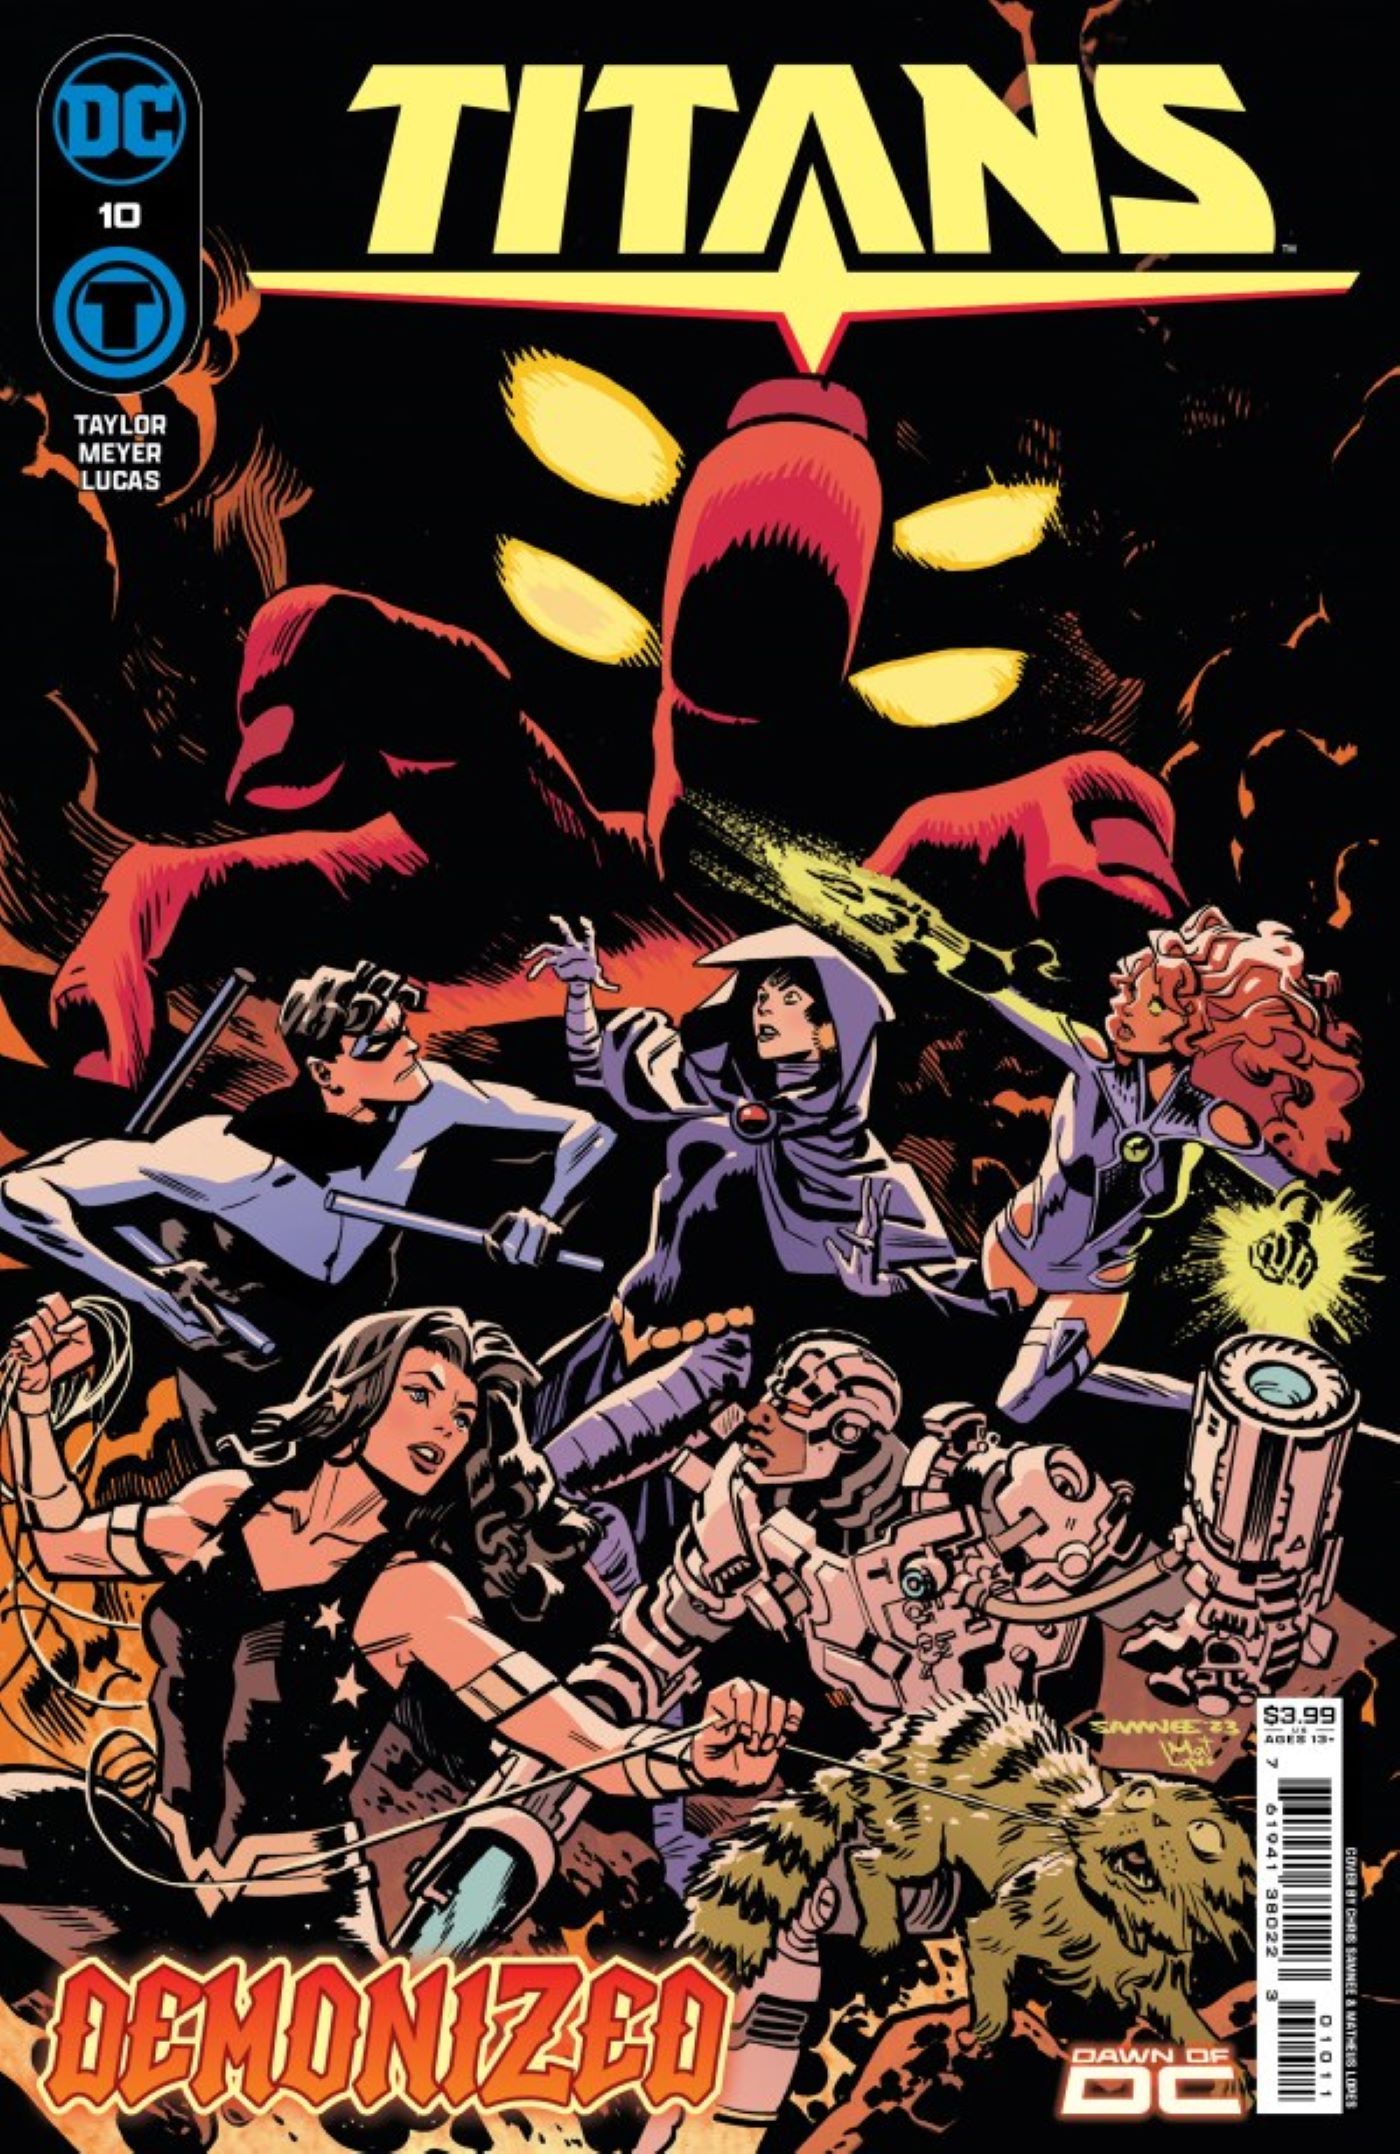 Titans #10 cover featuring Trigon Nightwing starfire raven donna troy cyborg beast boy